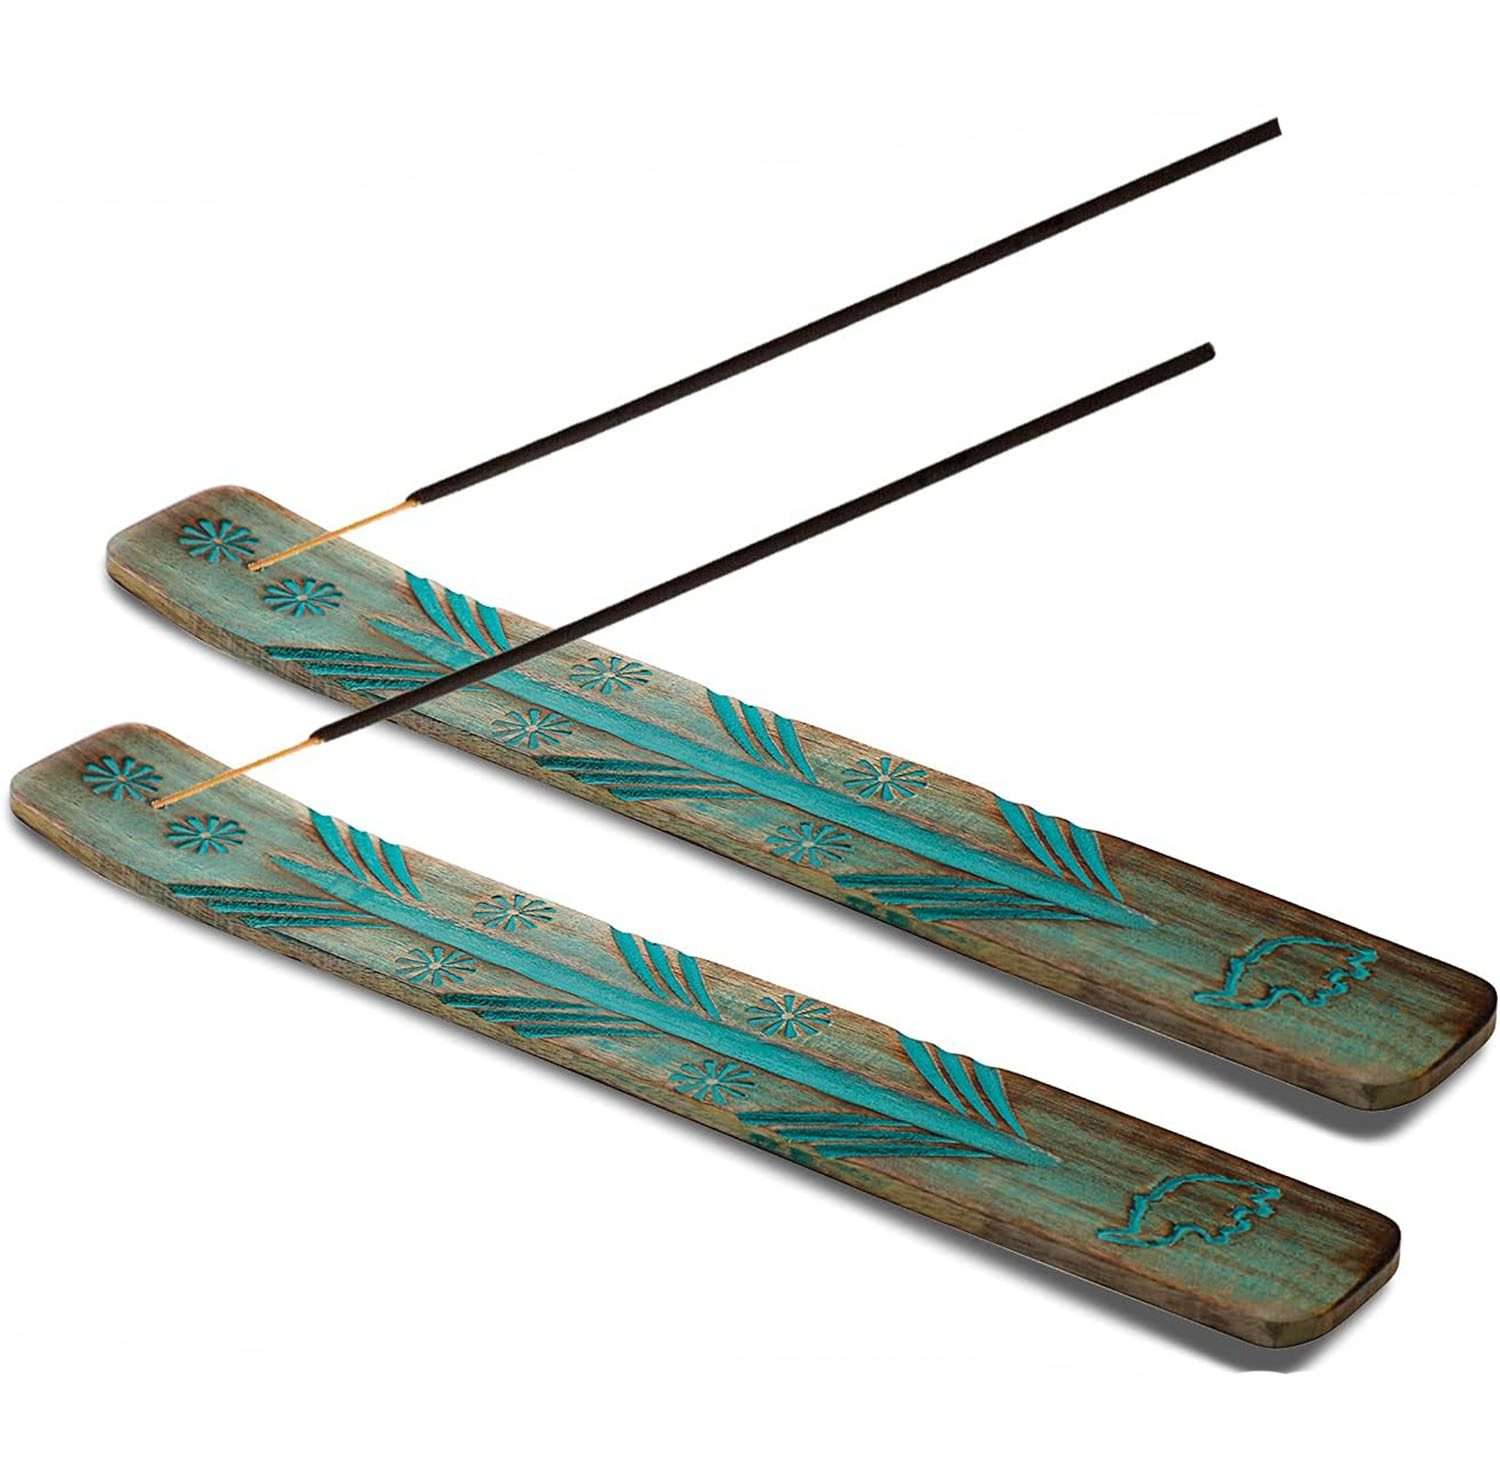 Wooden Incense Stick Holder | Handmade Incense Stick burner | painted by Artisans | For -Meditation, Yoga | Ornamental piece for Home, Office Decor | Pack of 2